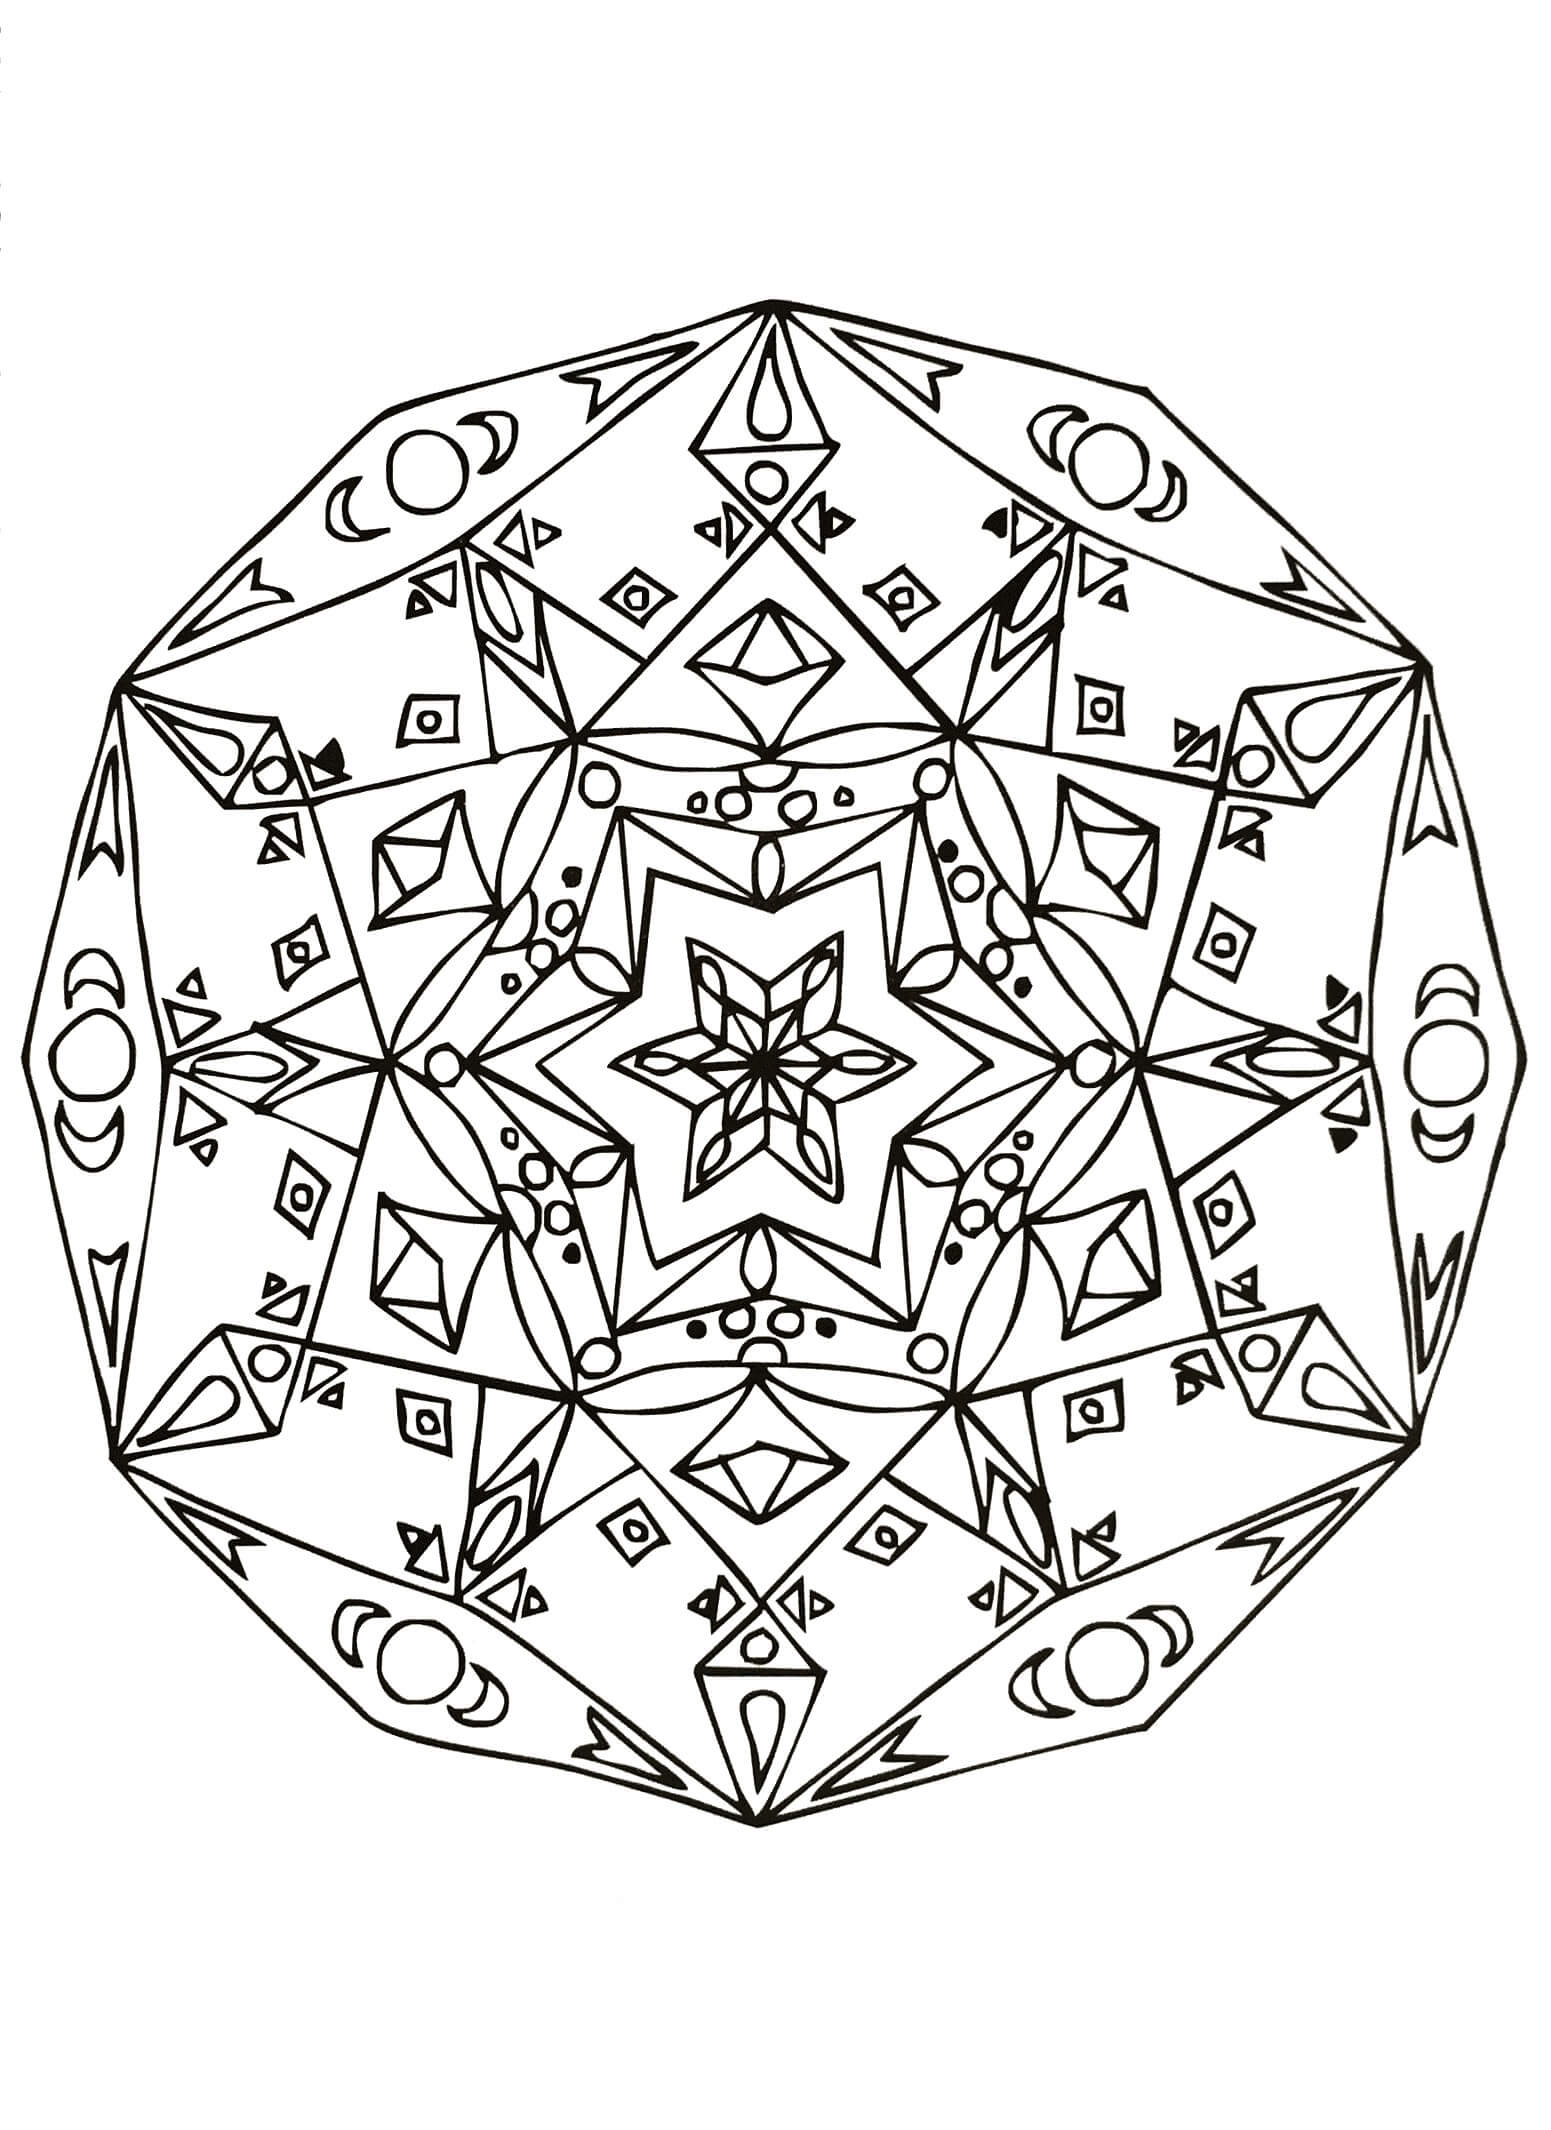 Mandala Winter Coloring Page - Sheet 2 Mandalas